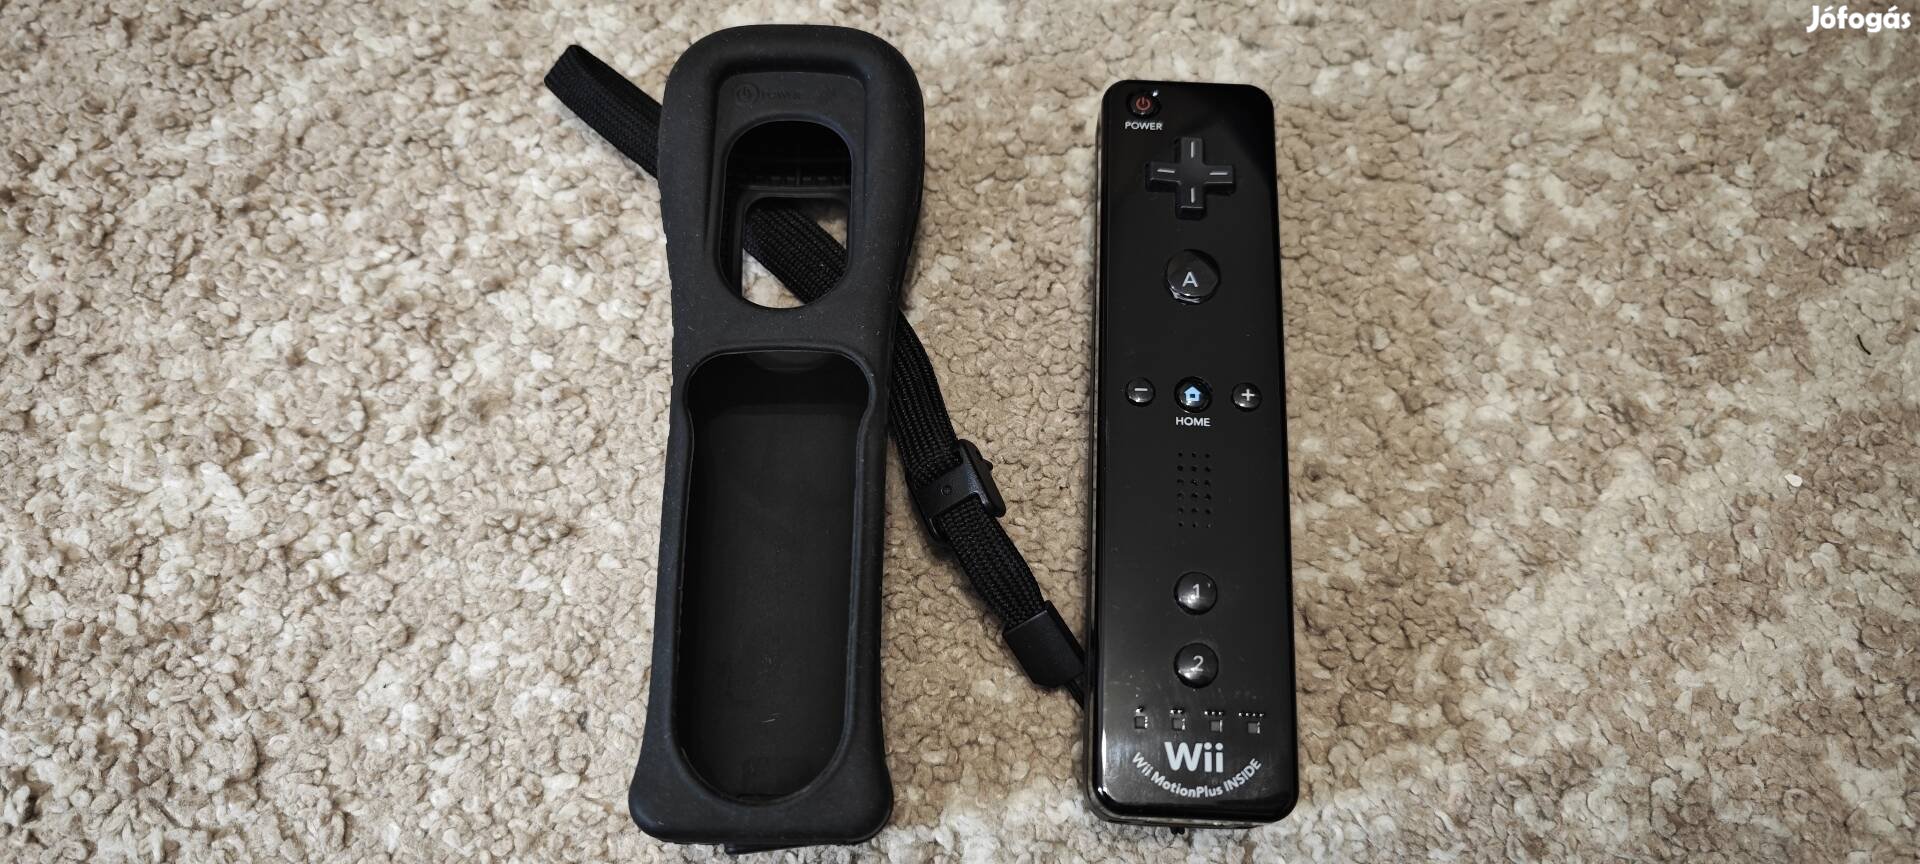 Nintendo Wii Wiimote Motionplus kontroller